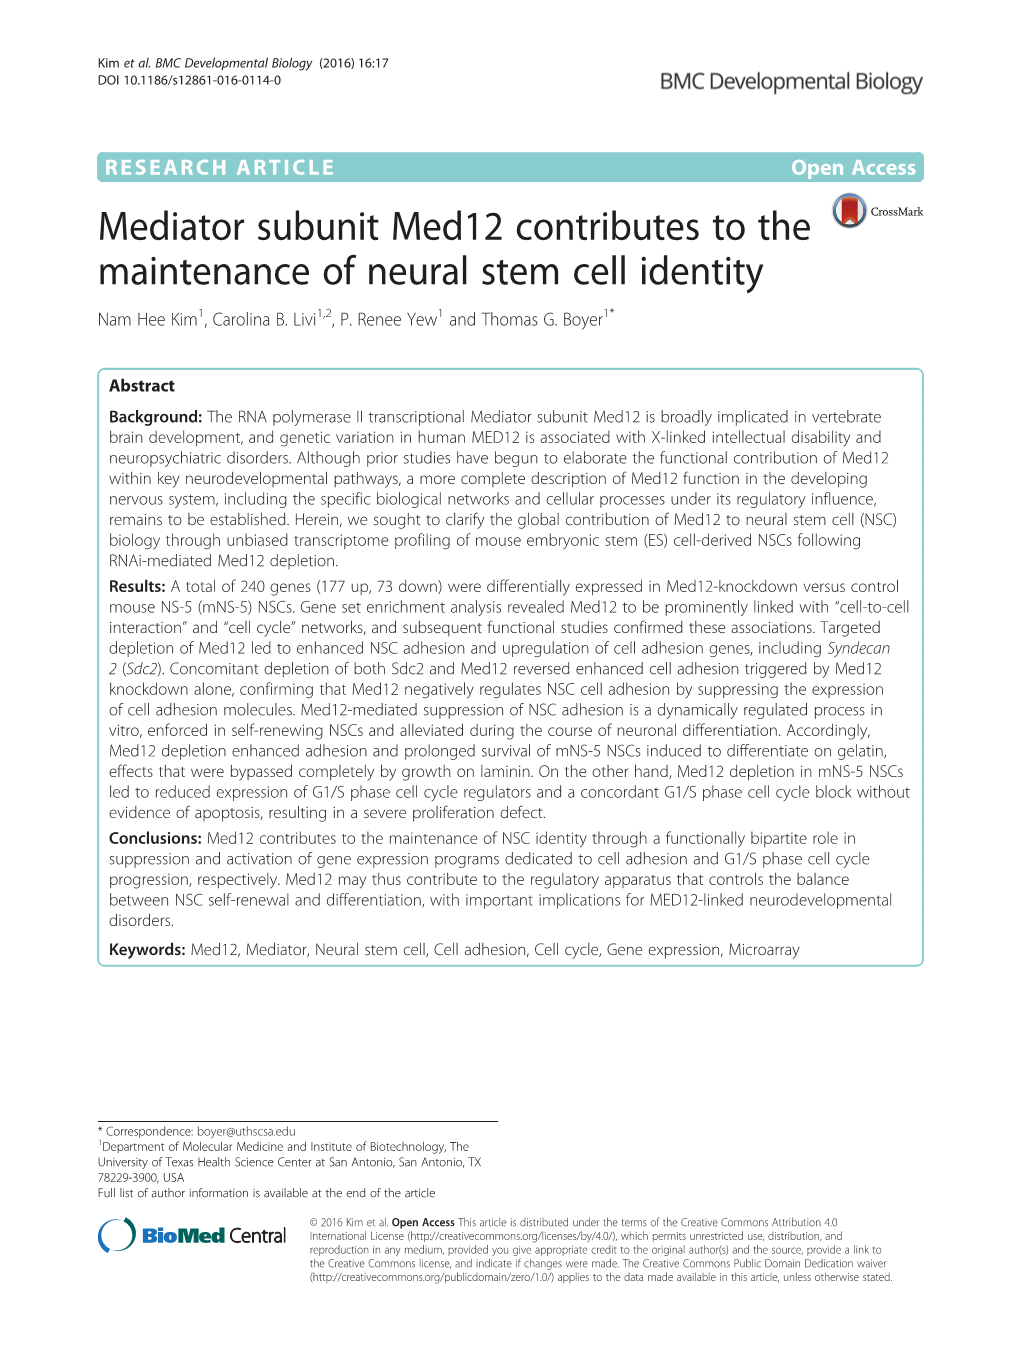 Mediator Subunit Med12 Contributes to the Maintenance of Neural Stem Cell Identity Nam Hee Kim1, Carolina B